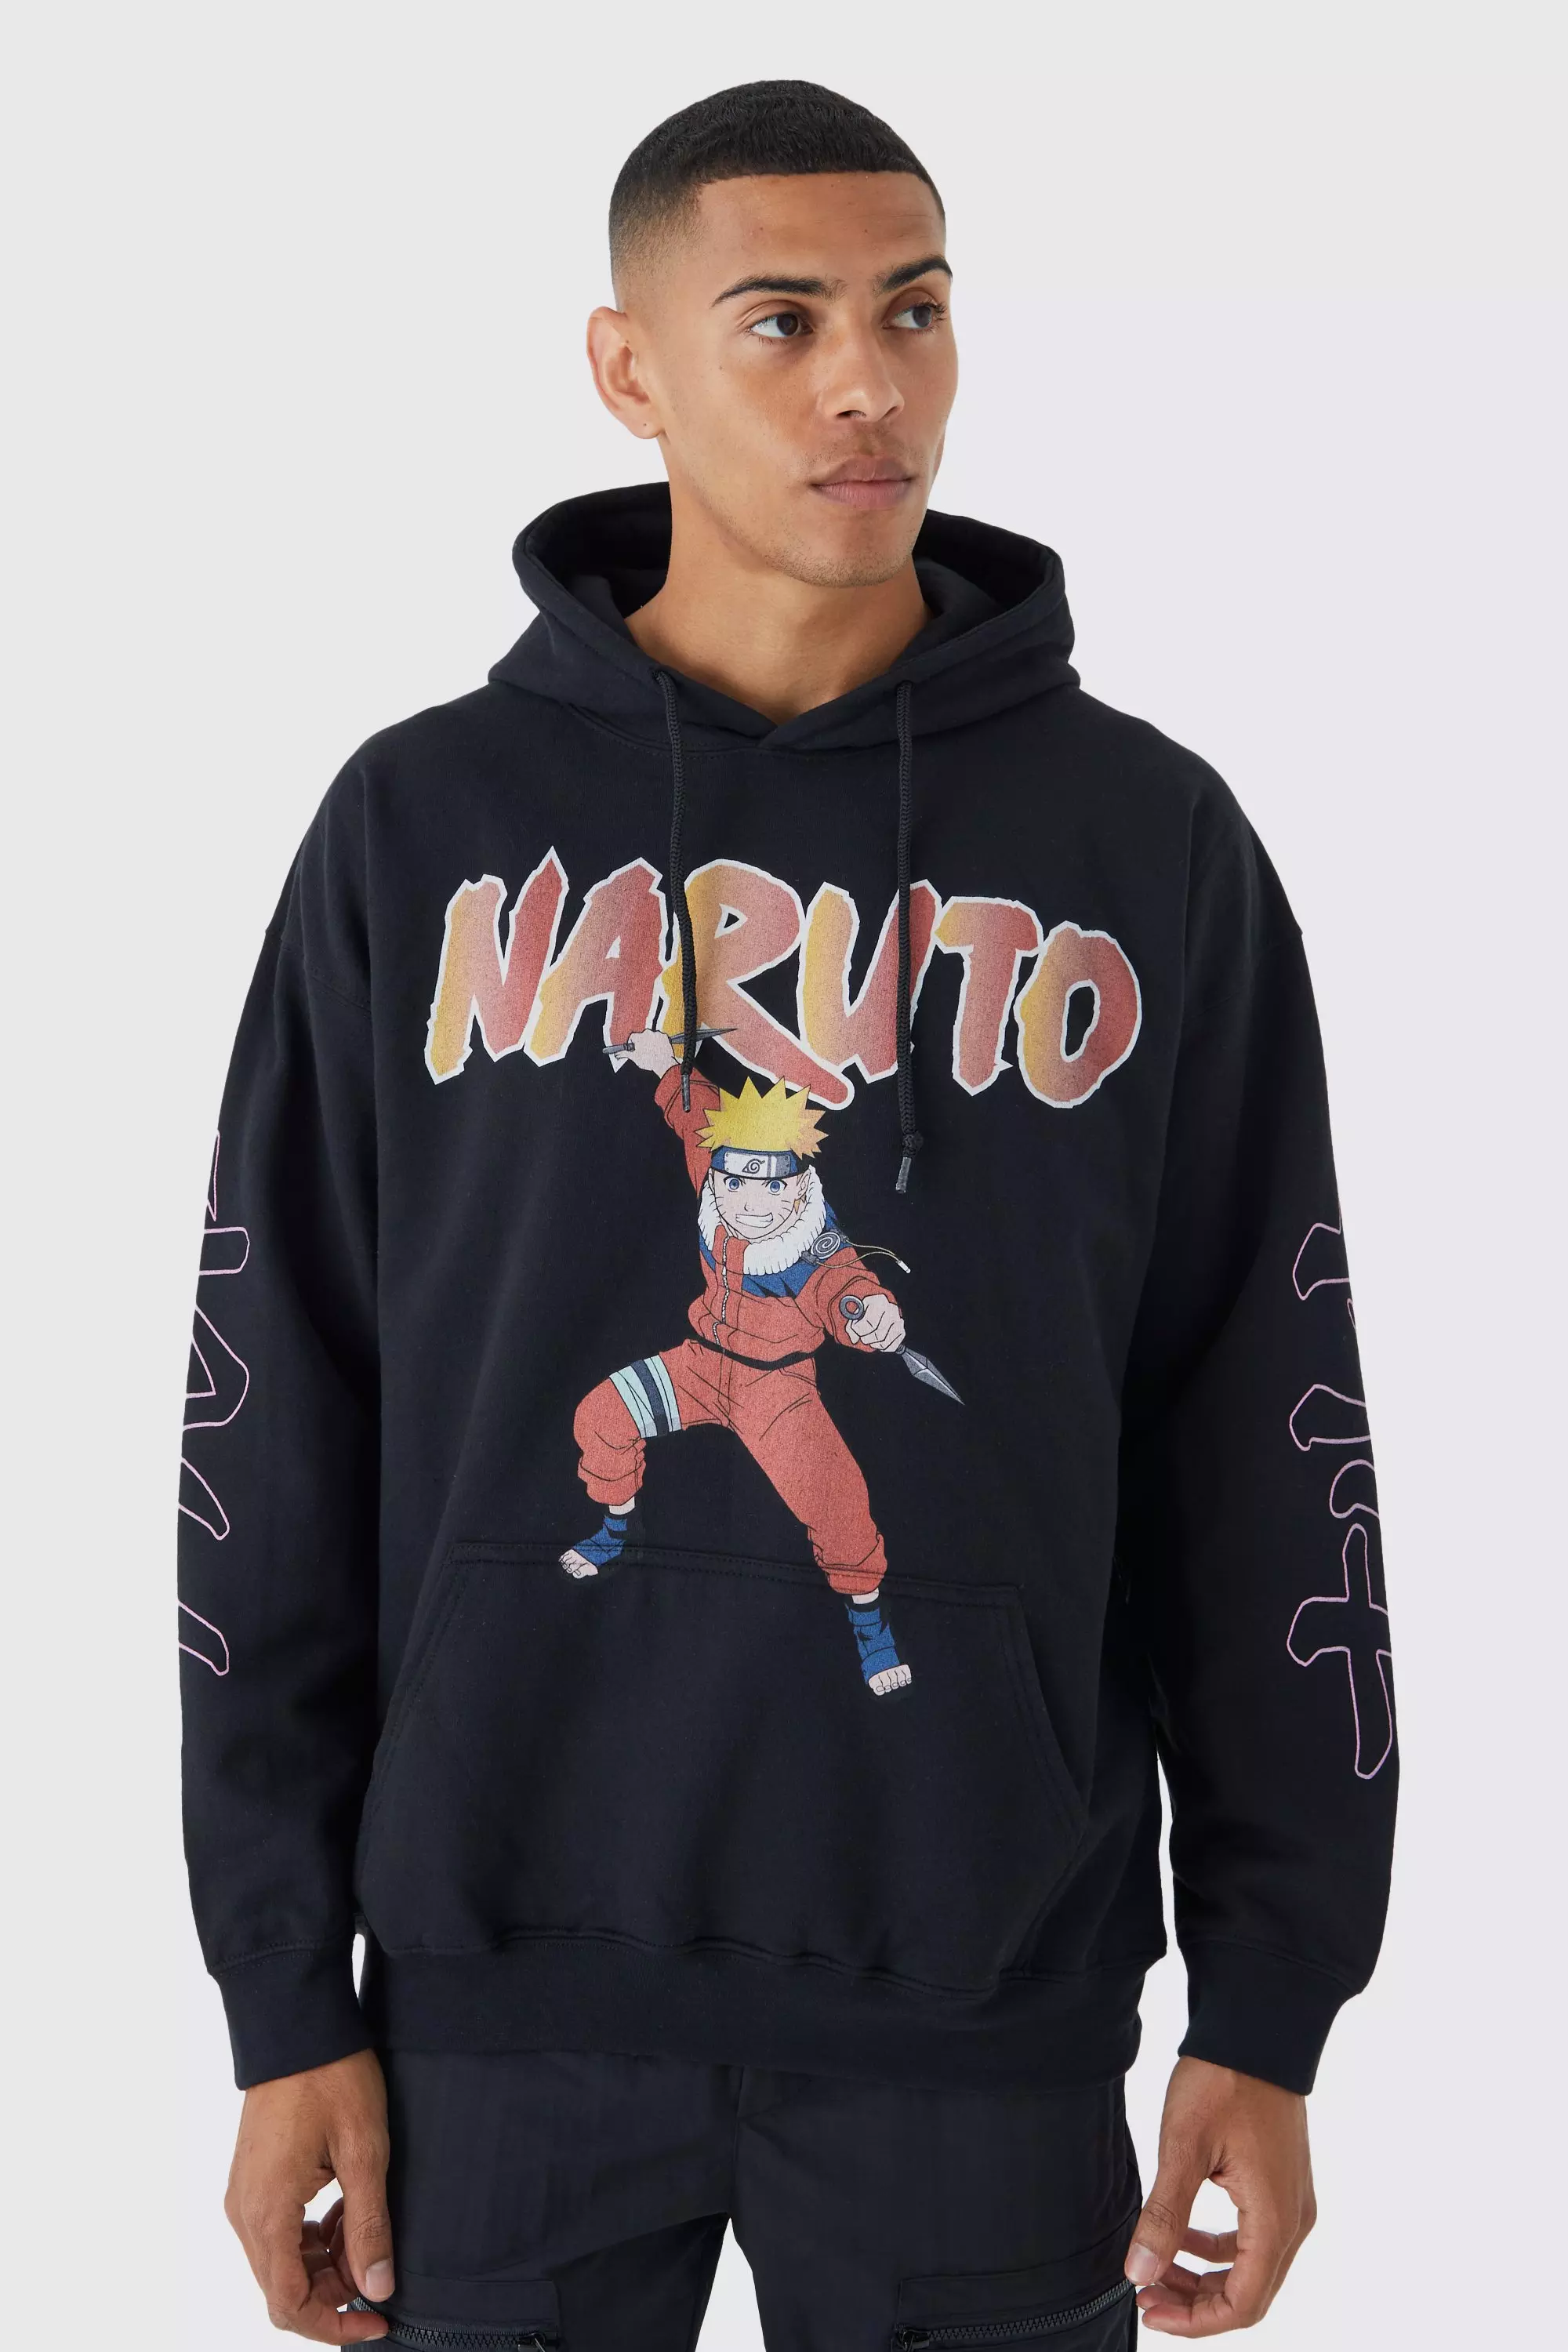 Oversized Naruto Anime License Hoodie Black